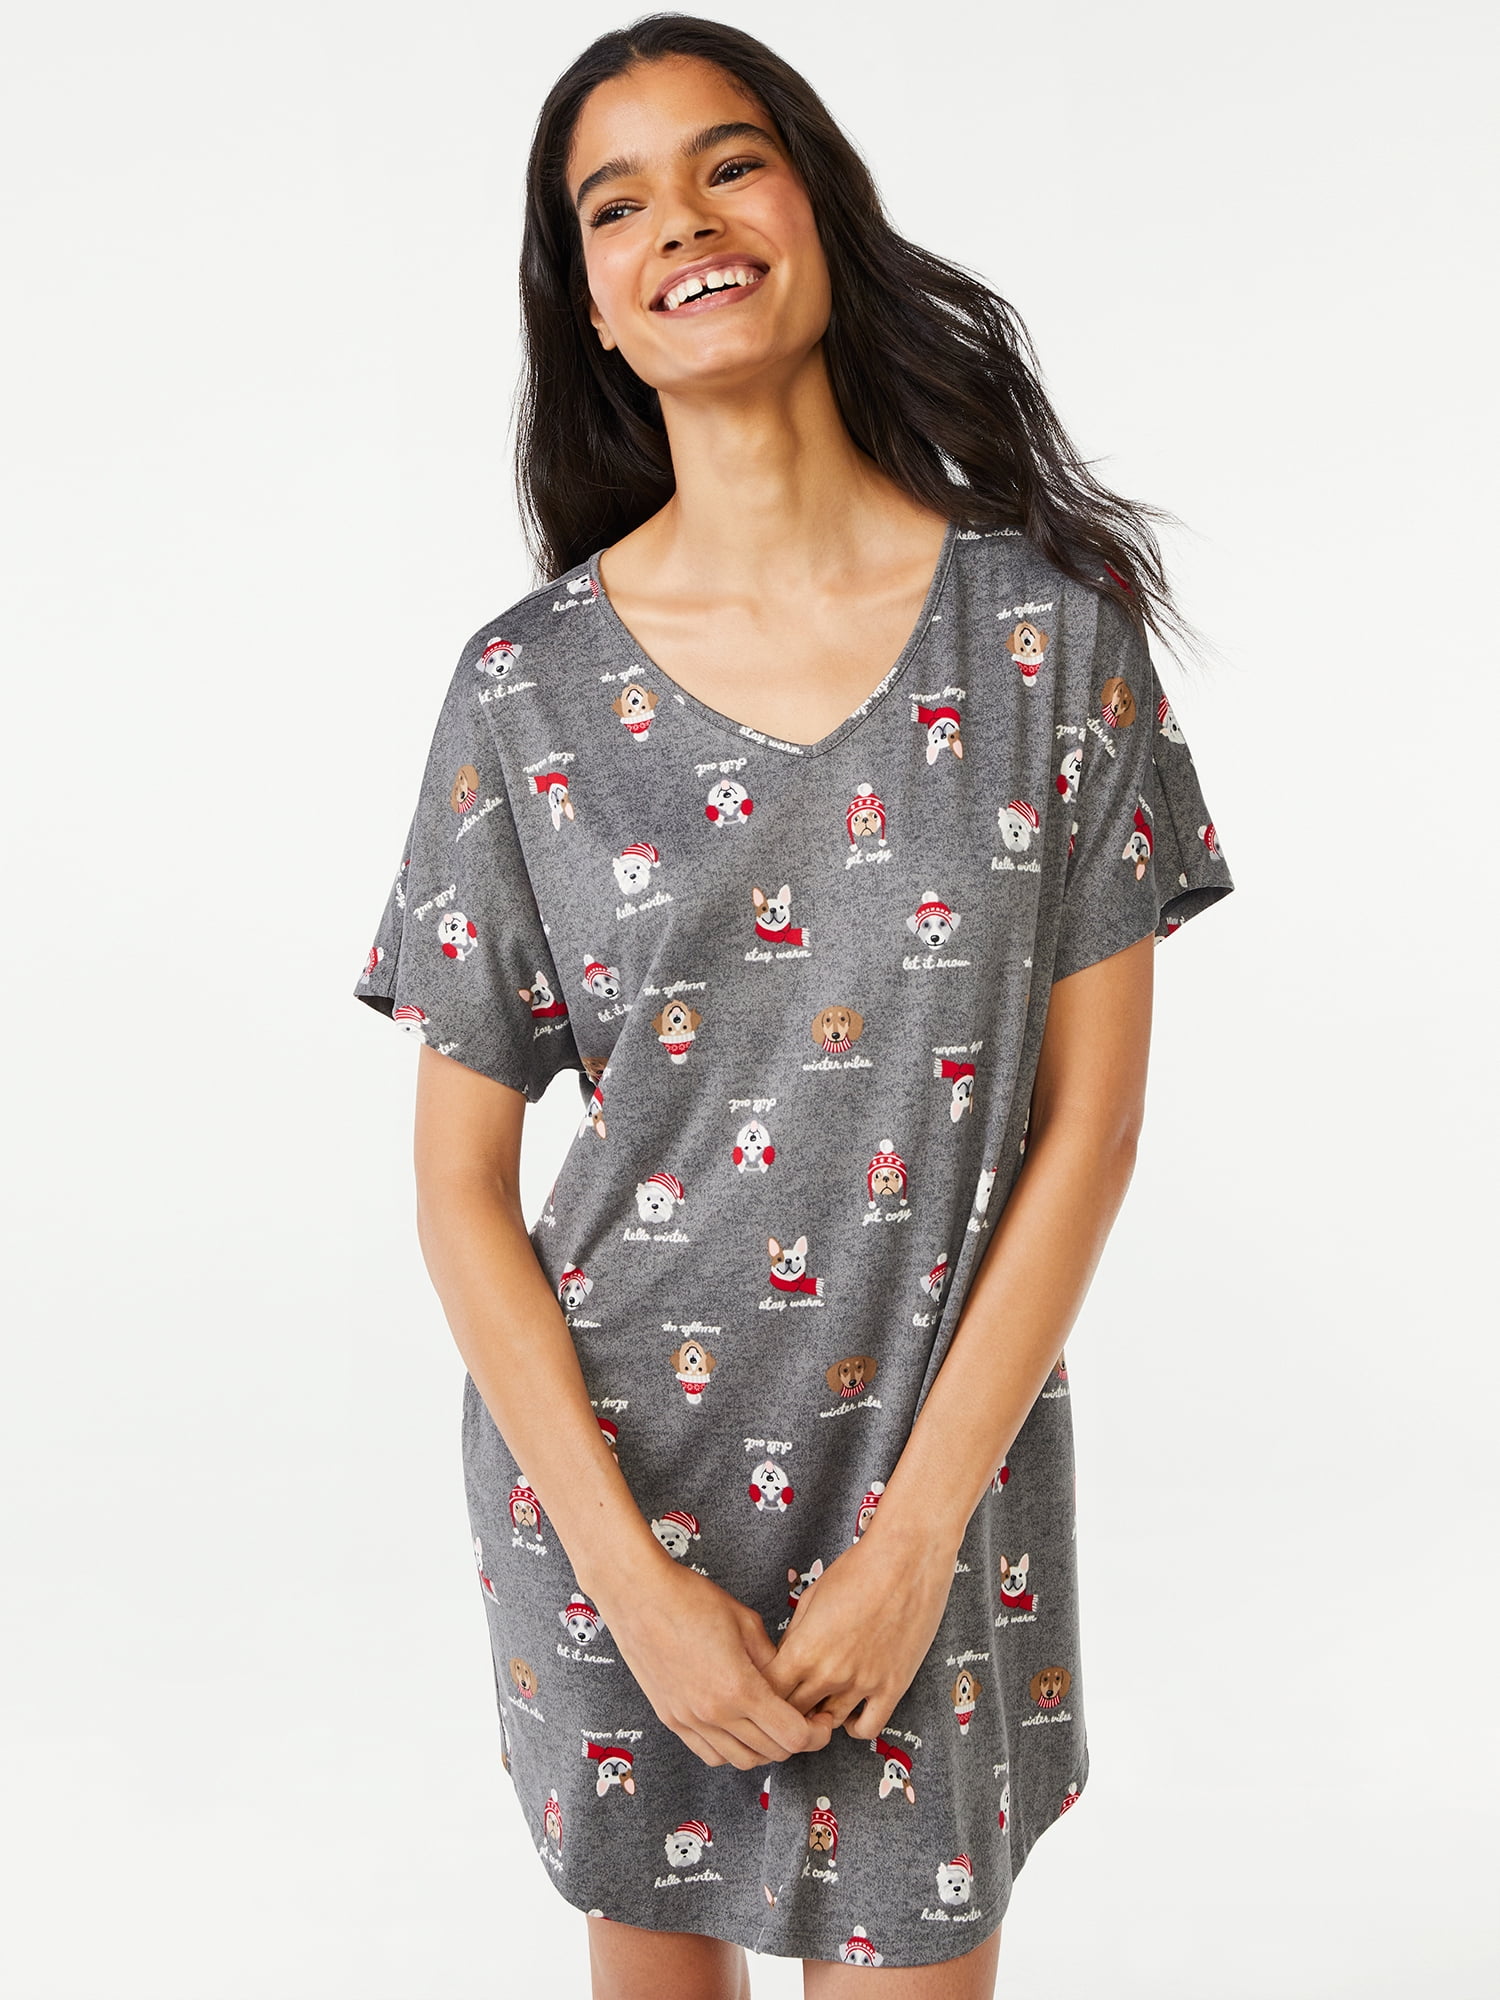 Joyspun Women's Dog Print Sleep Shirt, Sizes up to 3X